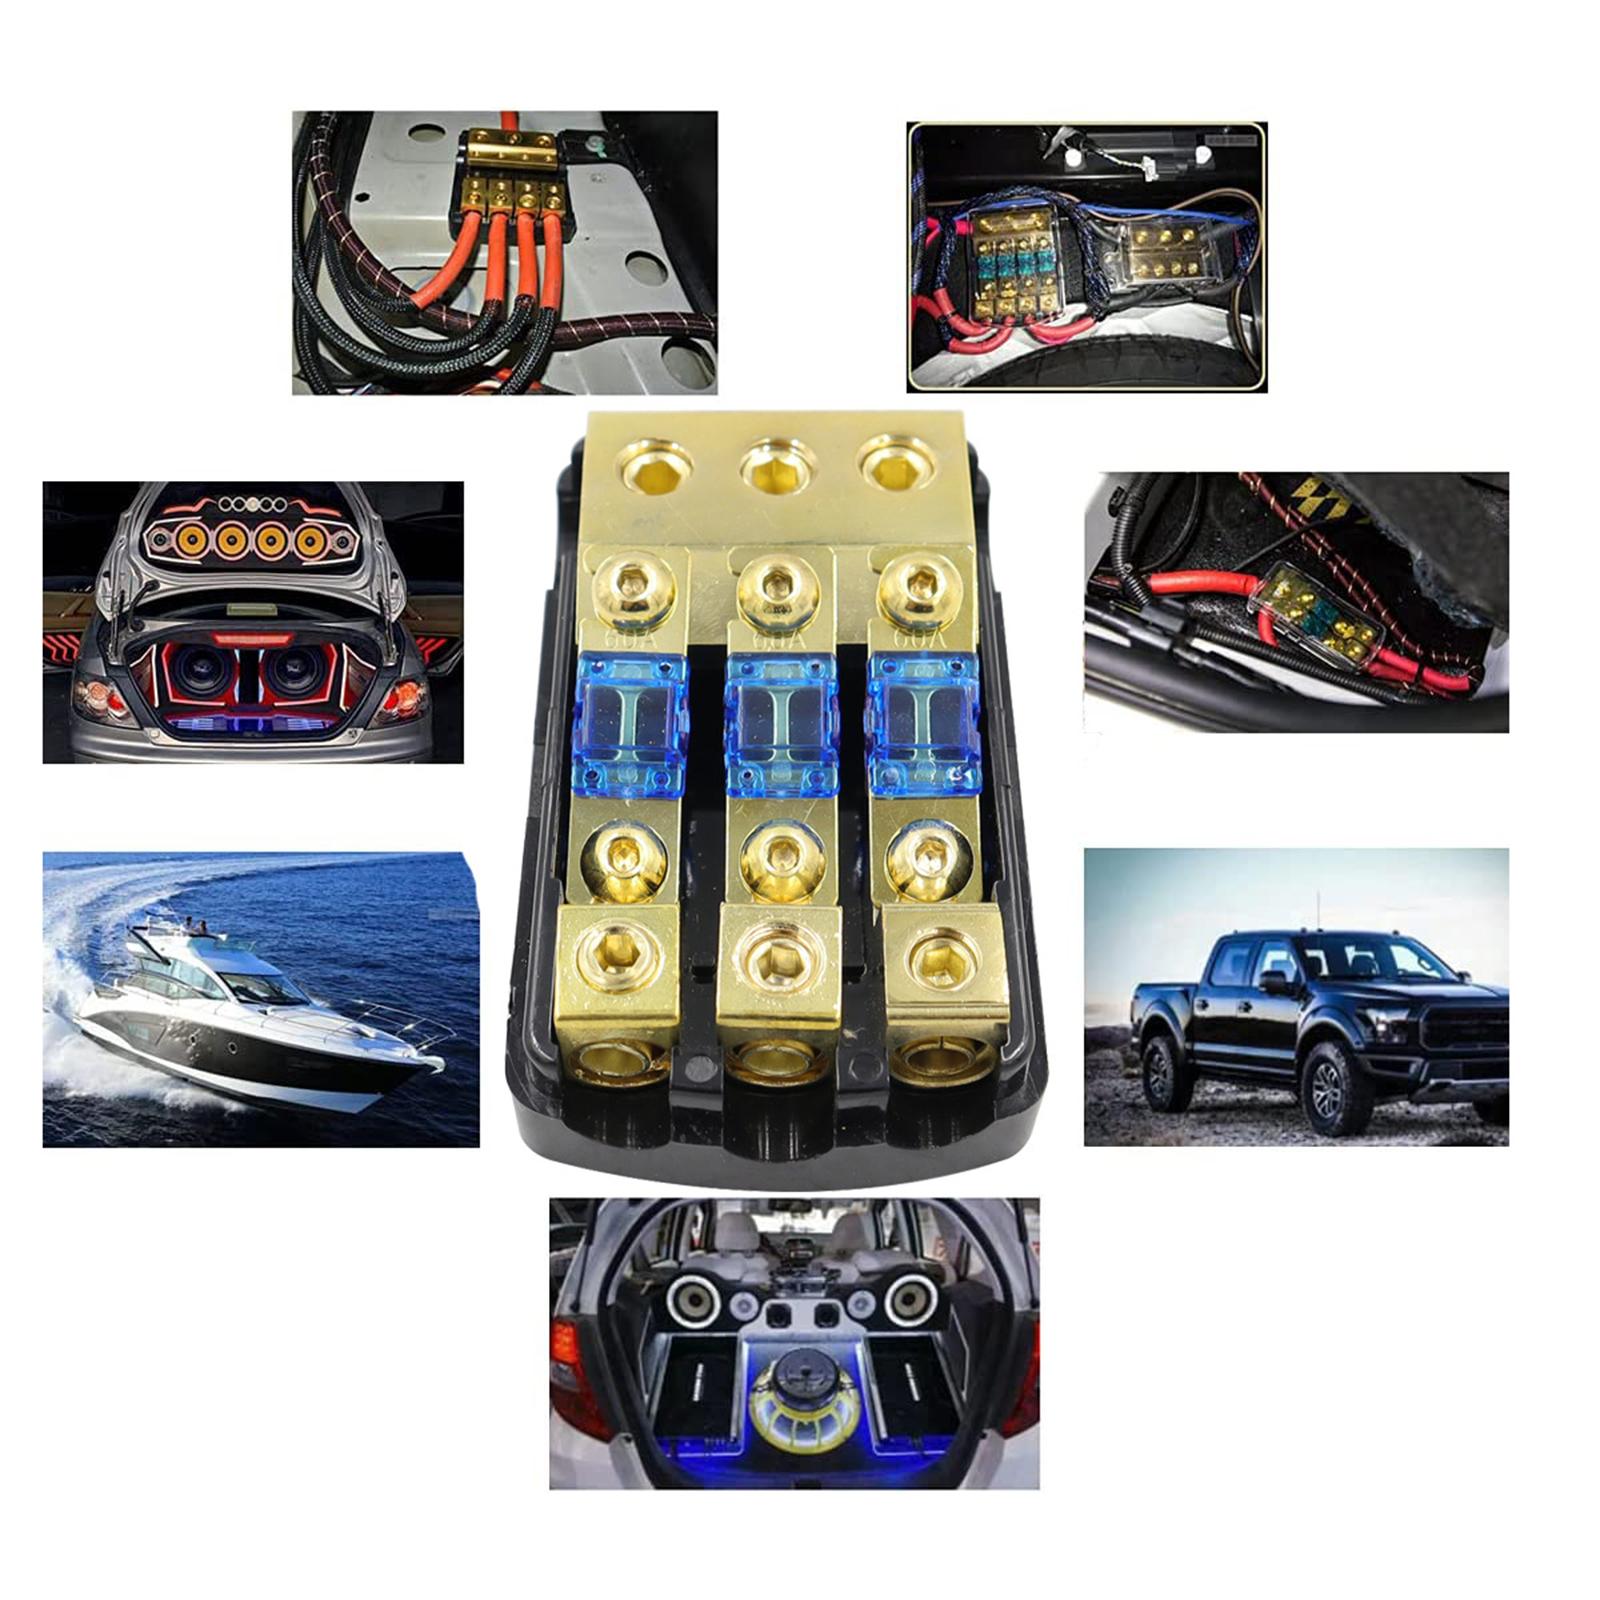 Mini Anl Fuse Holder Professional Anl Fuse Box for Car Stereo Amplifier